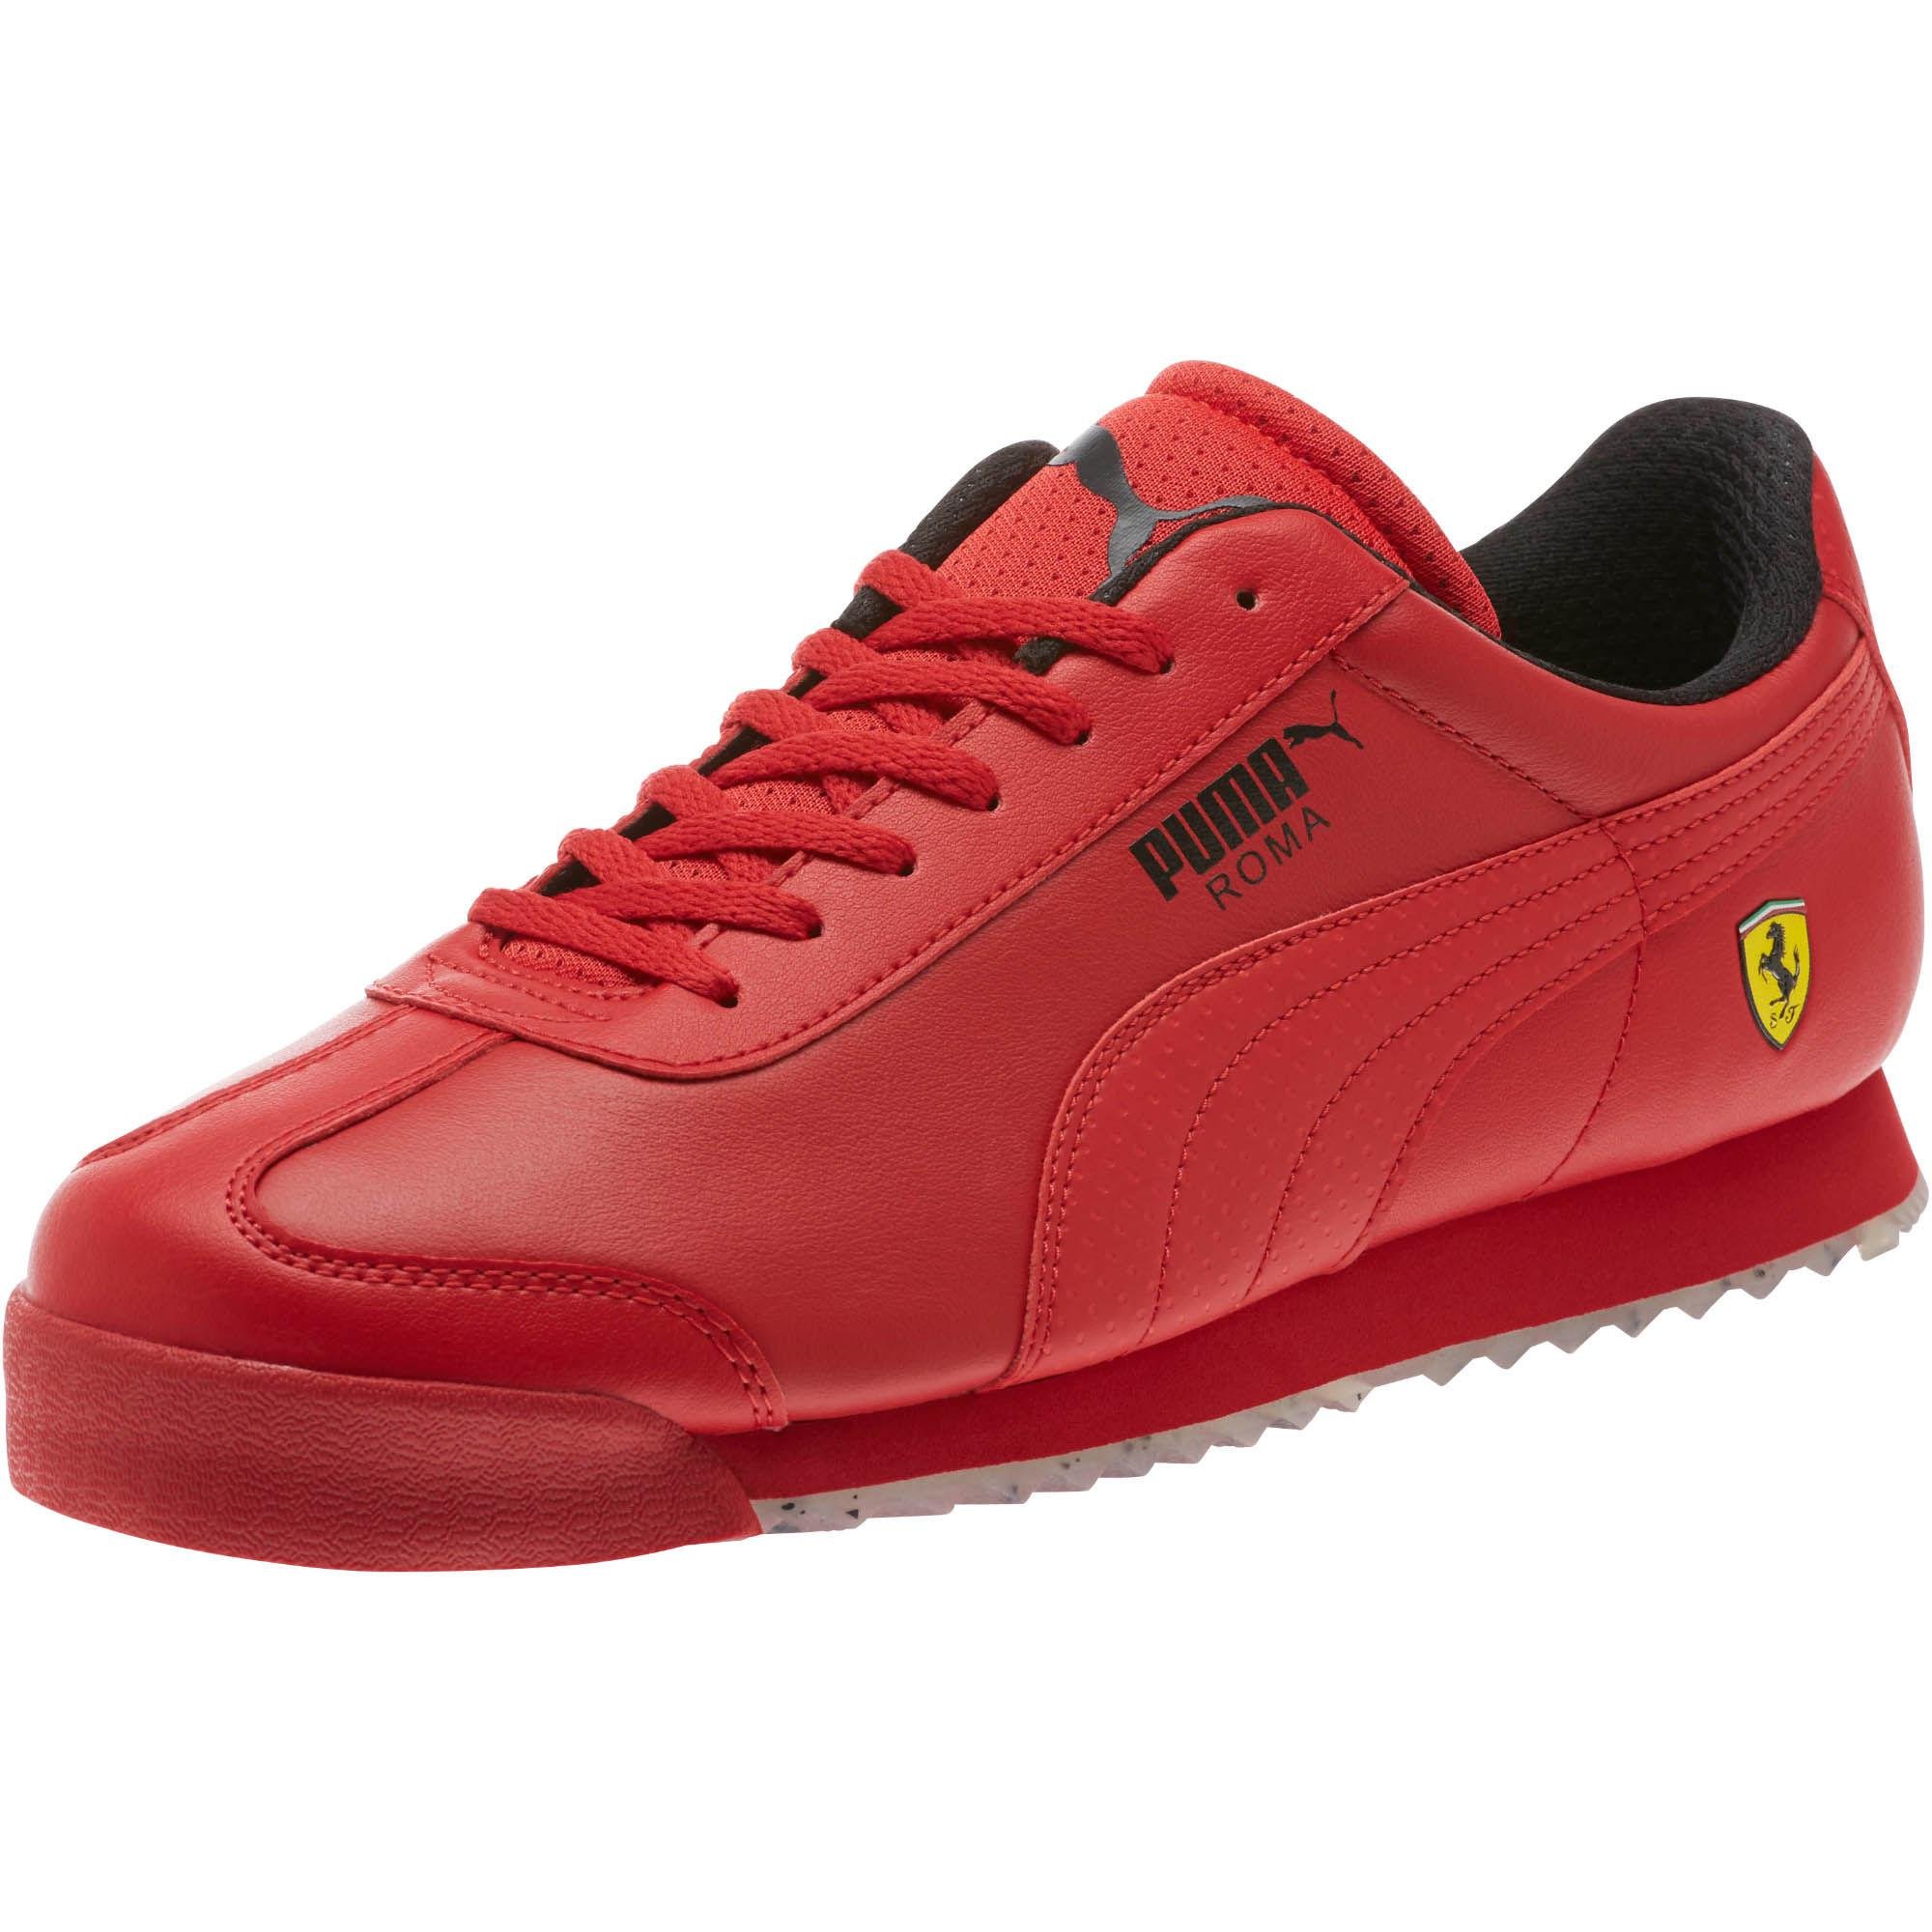 Lyst - Puma Ferrari Roma Men's Sneakers in Red for Men